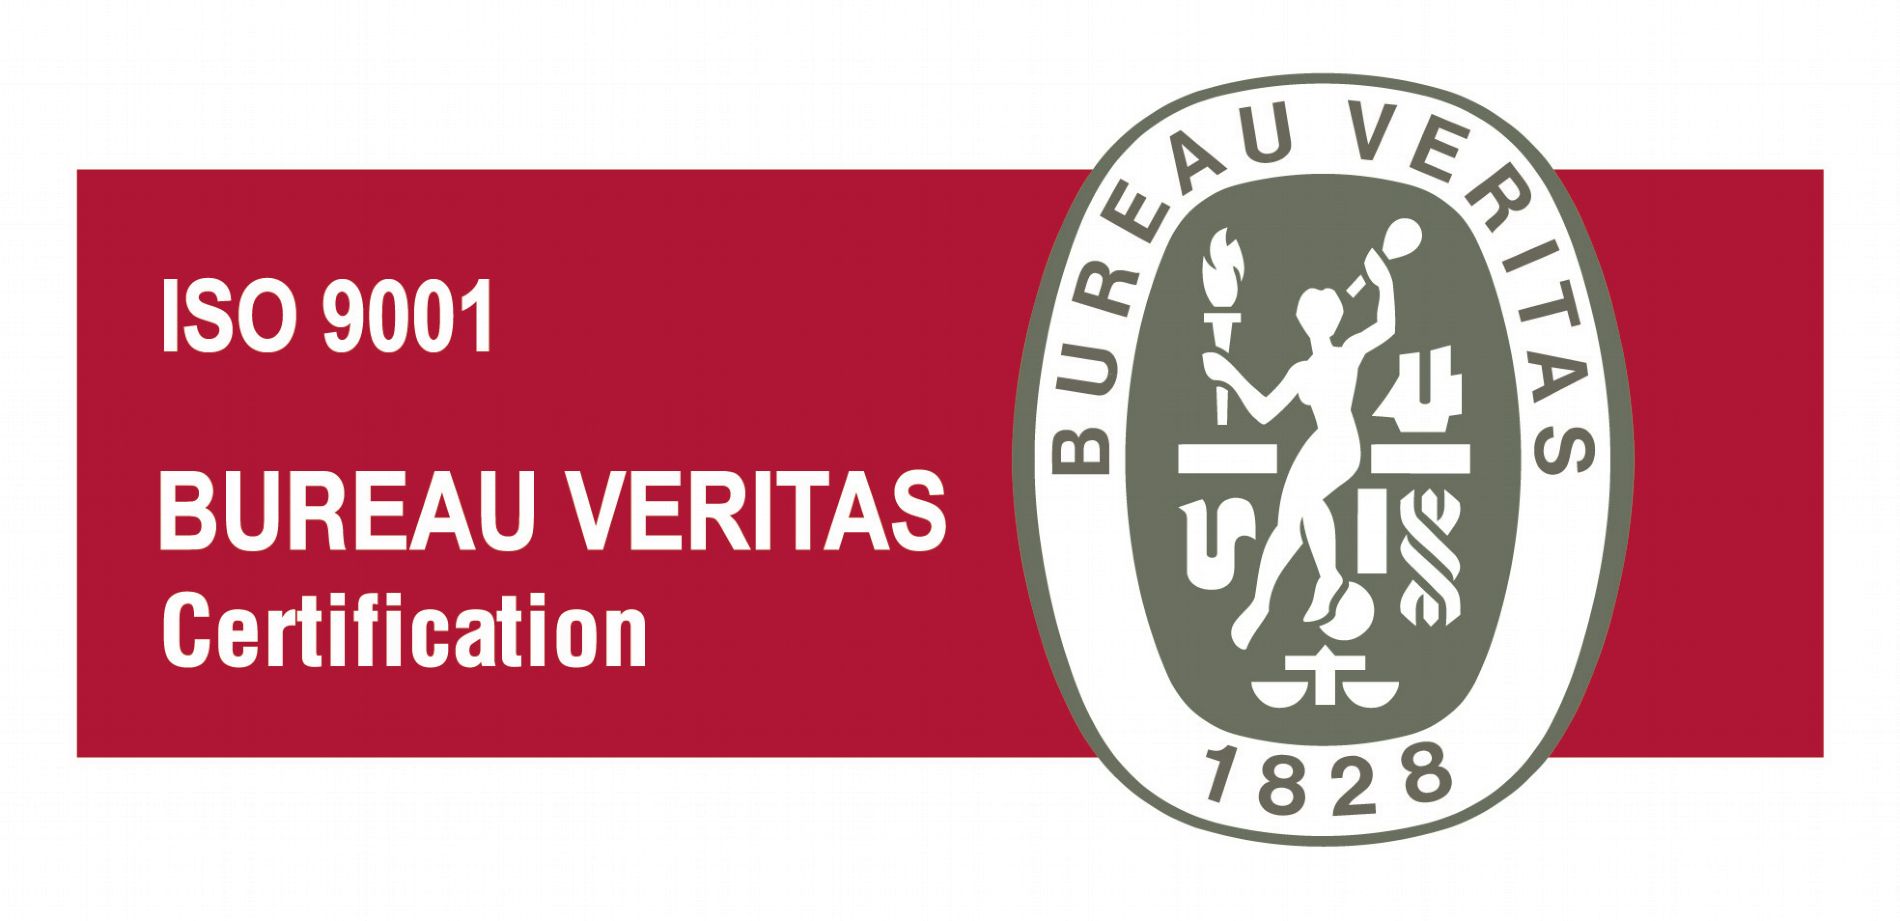 Qualit Carbotecnia certifie par Bureau Veritas avec ISO 9001:2015